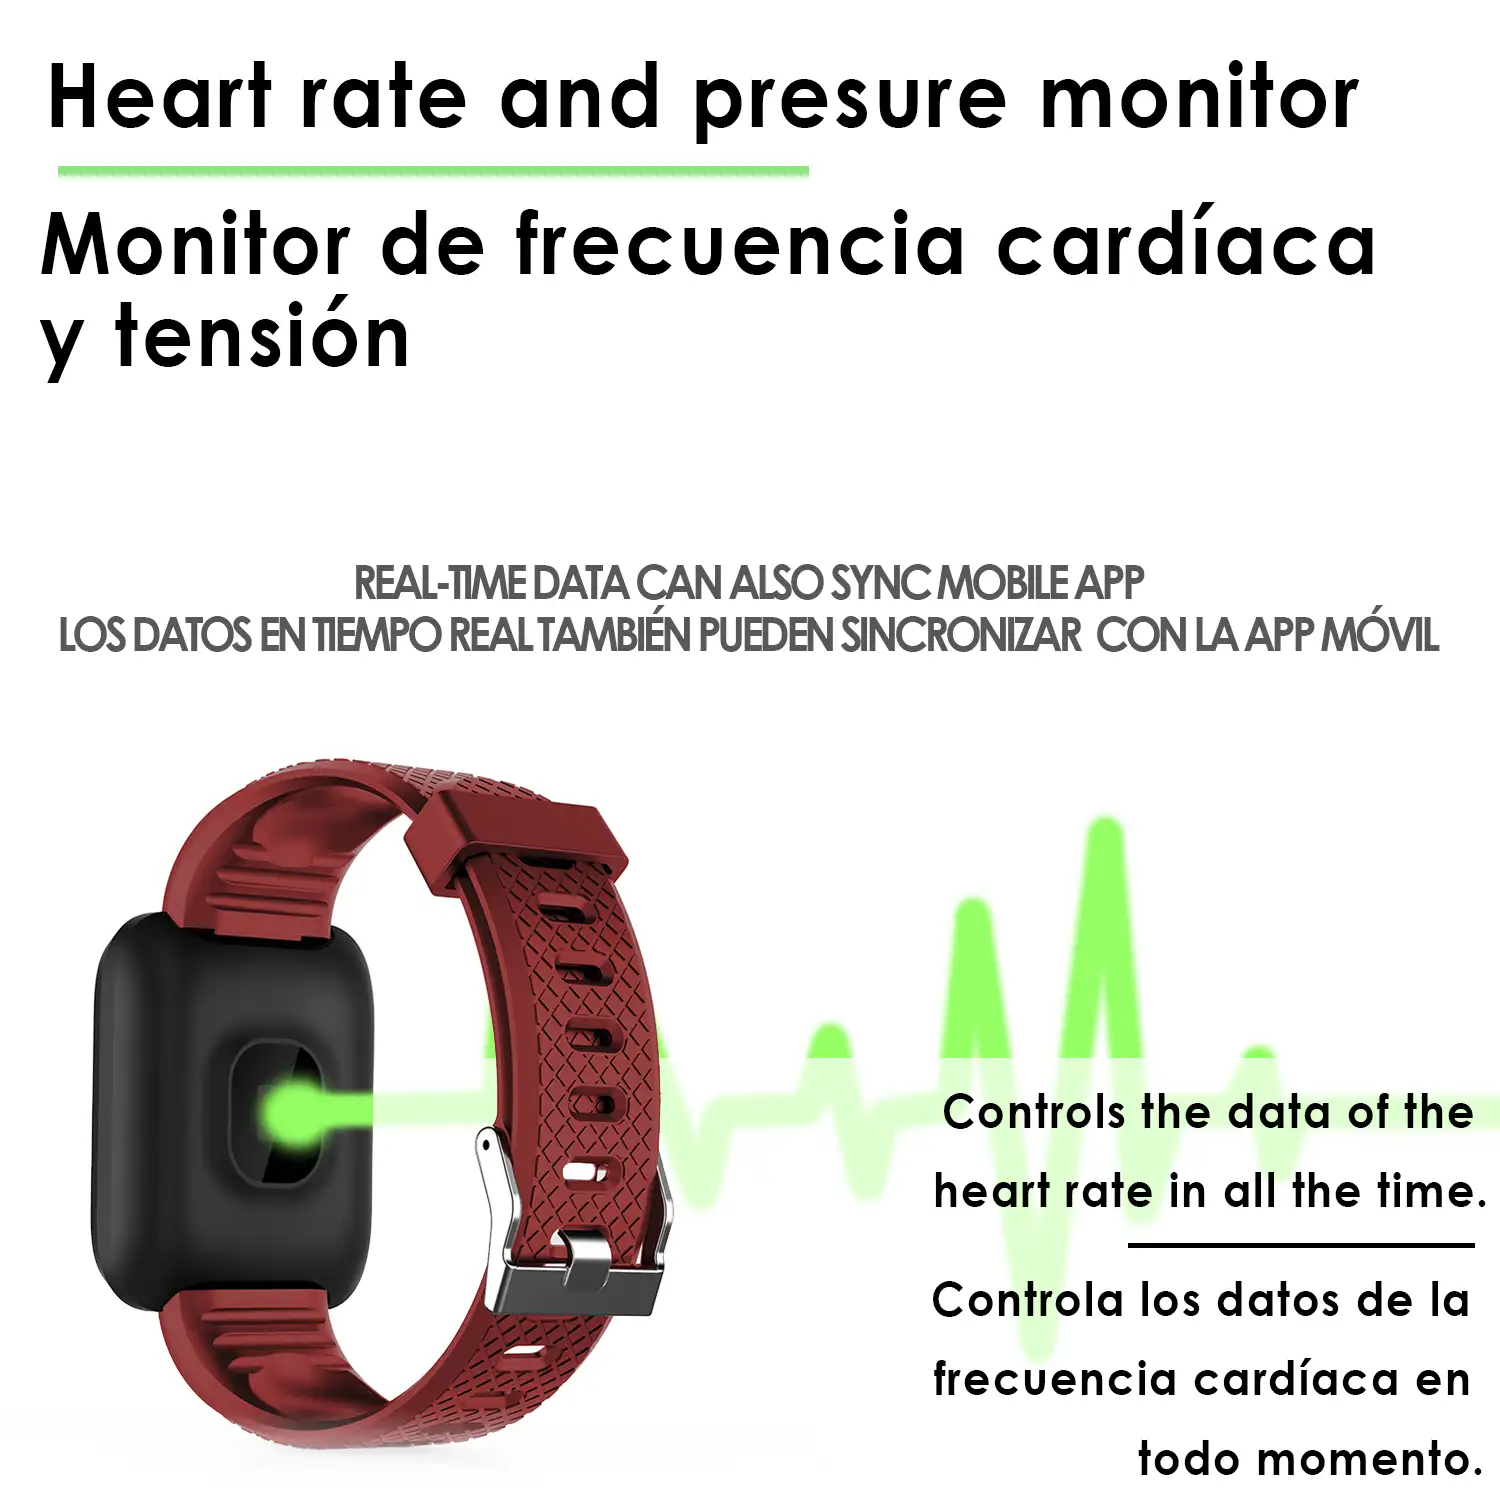 Brazalete inteligente ID116 Bluetooth 4.0 pantalla color, monitor cardiaco, pulso y modo multideporte